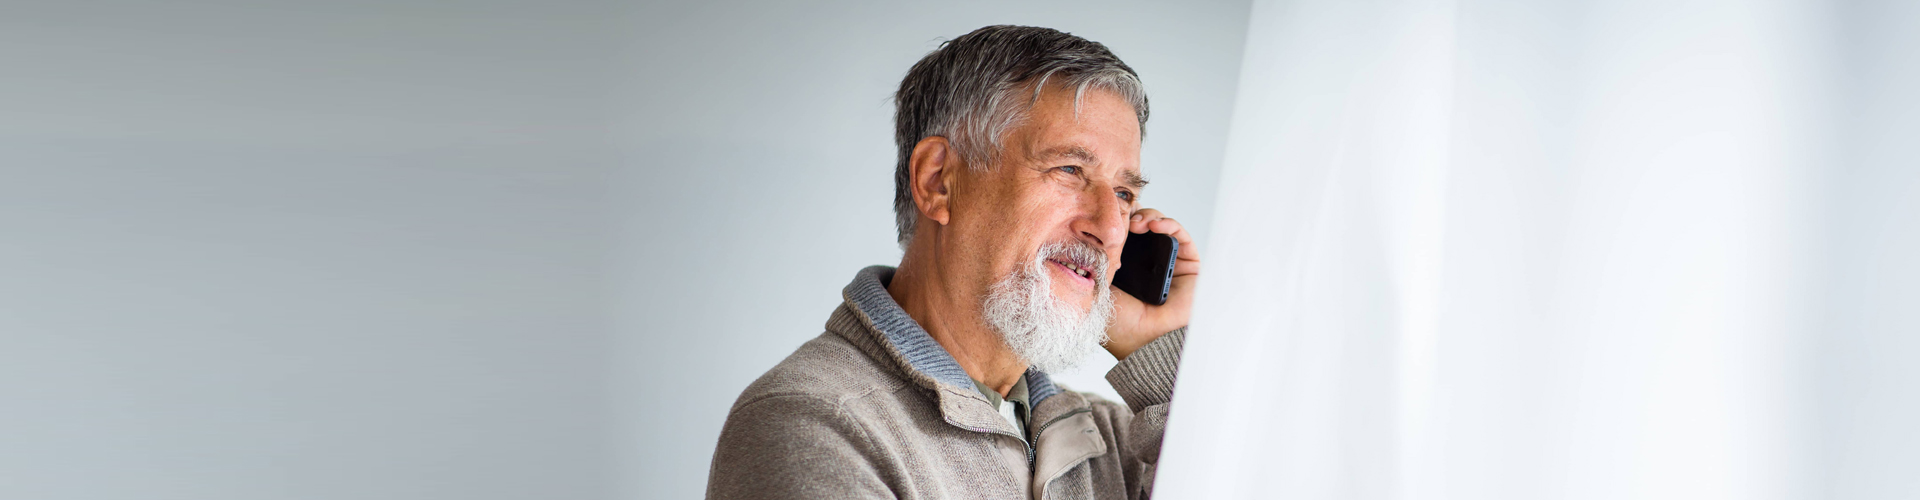 elderly man answering a phone call